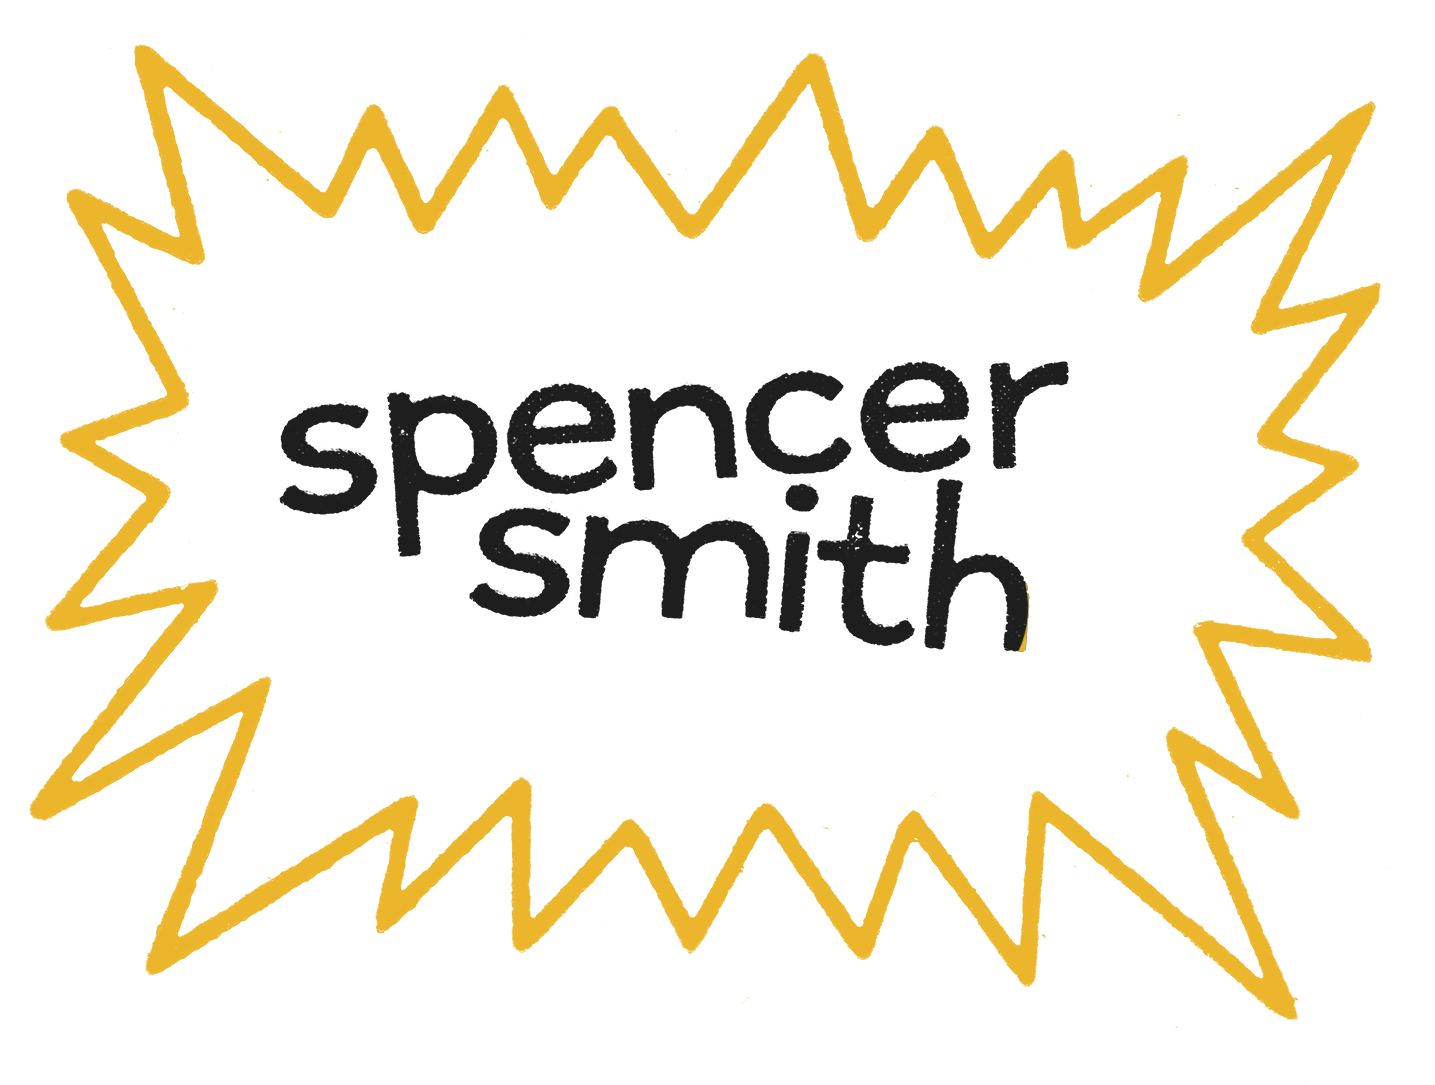 SPENCER SMITH